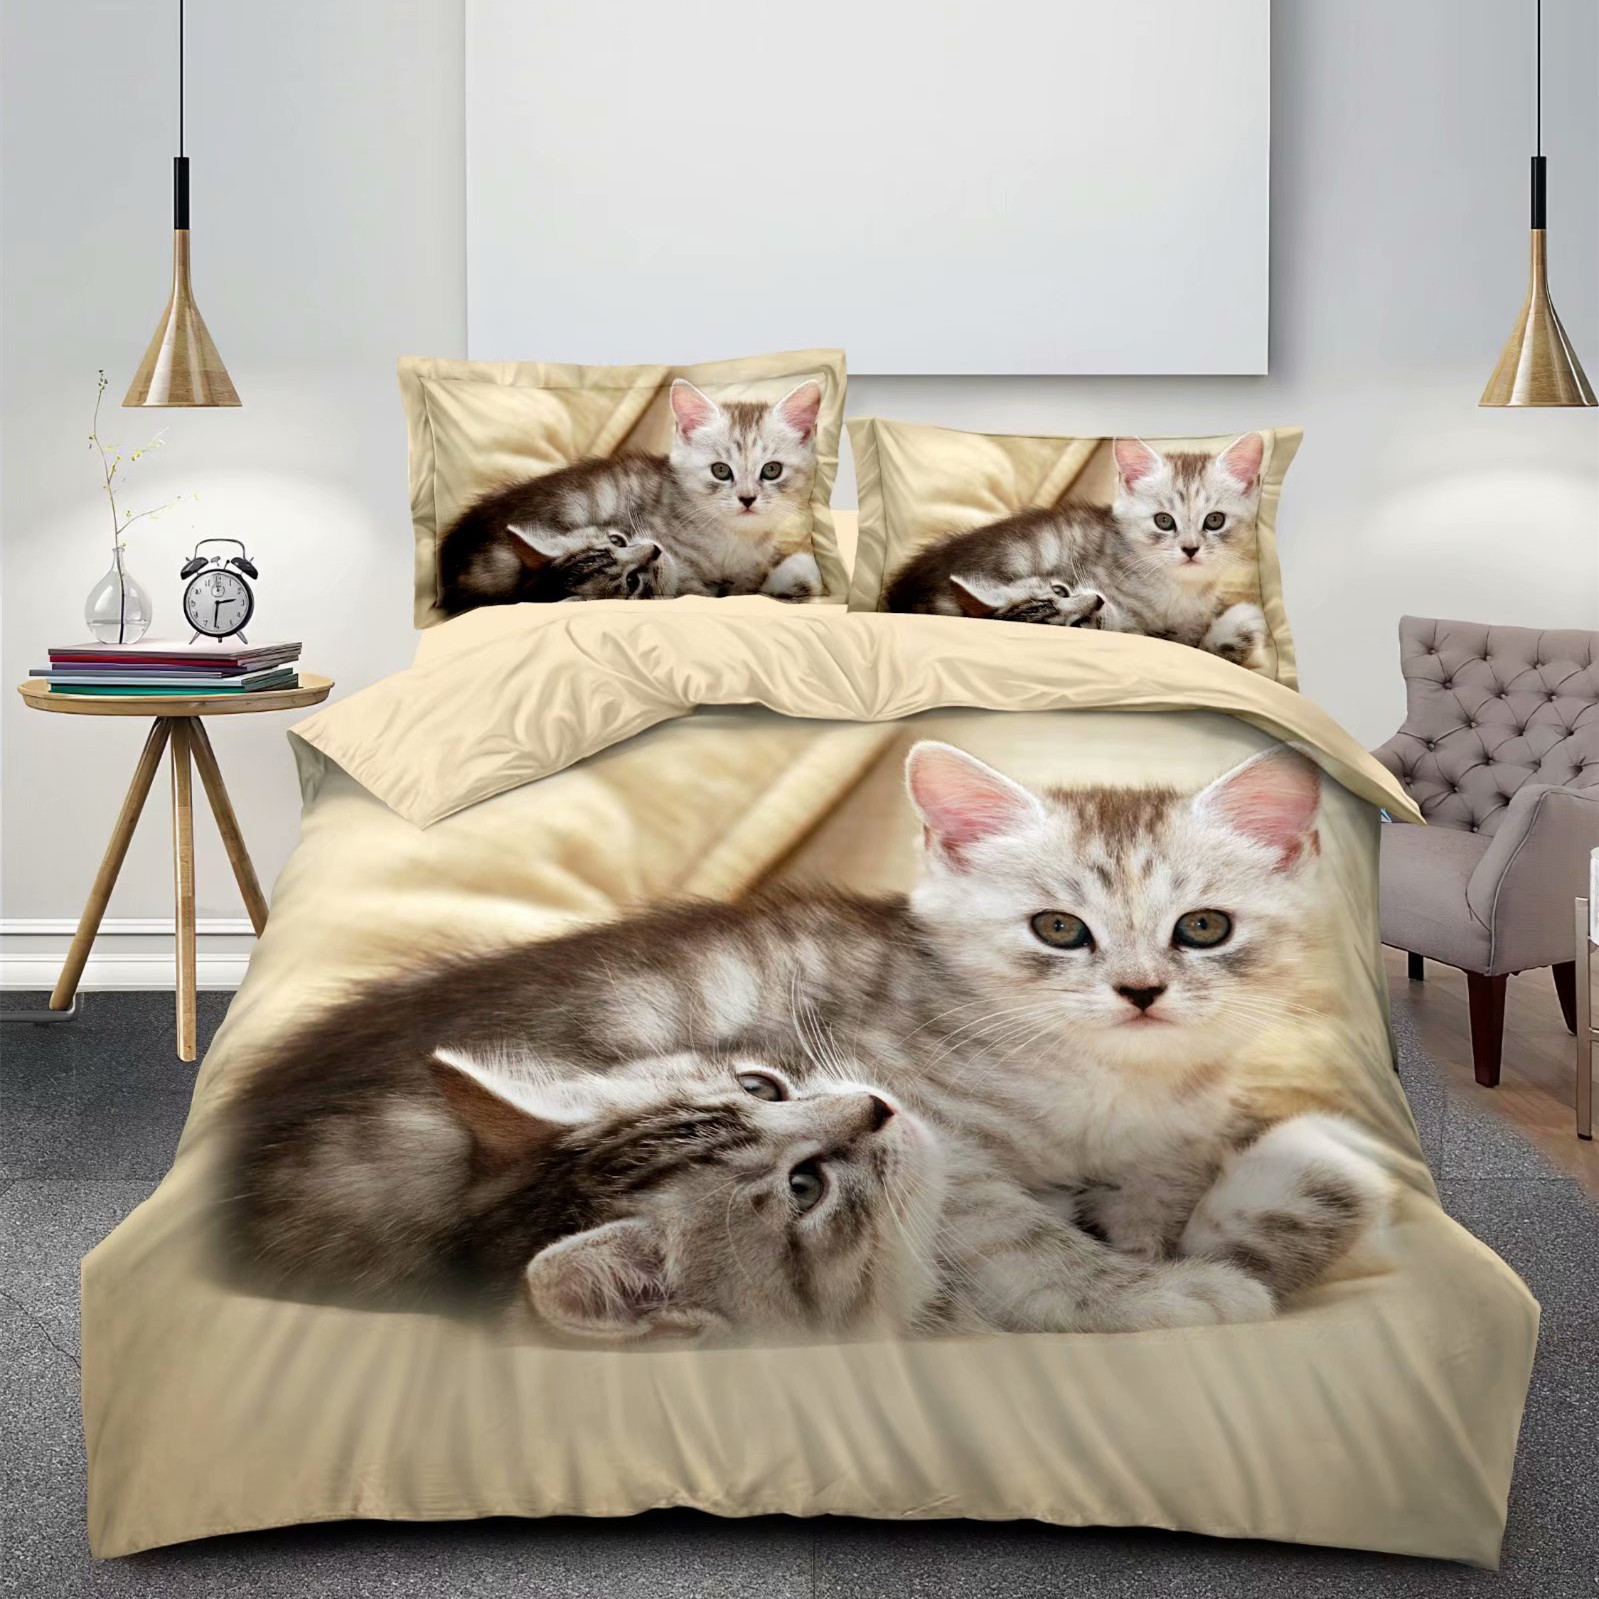 3D cat patterns printed bedding sheets sets - Nantong Import And Export ...